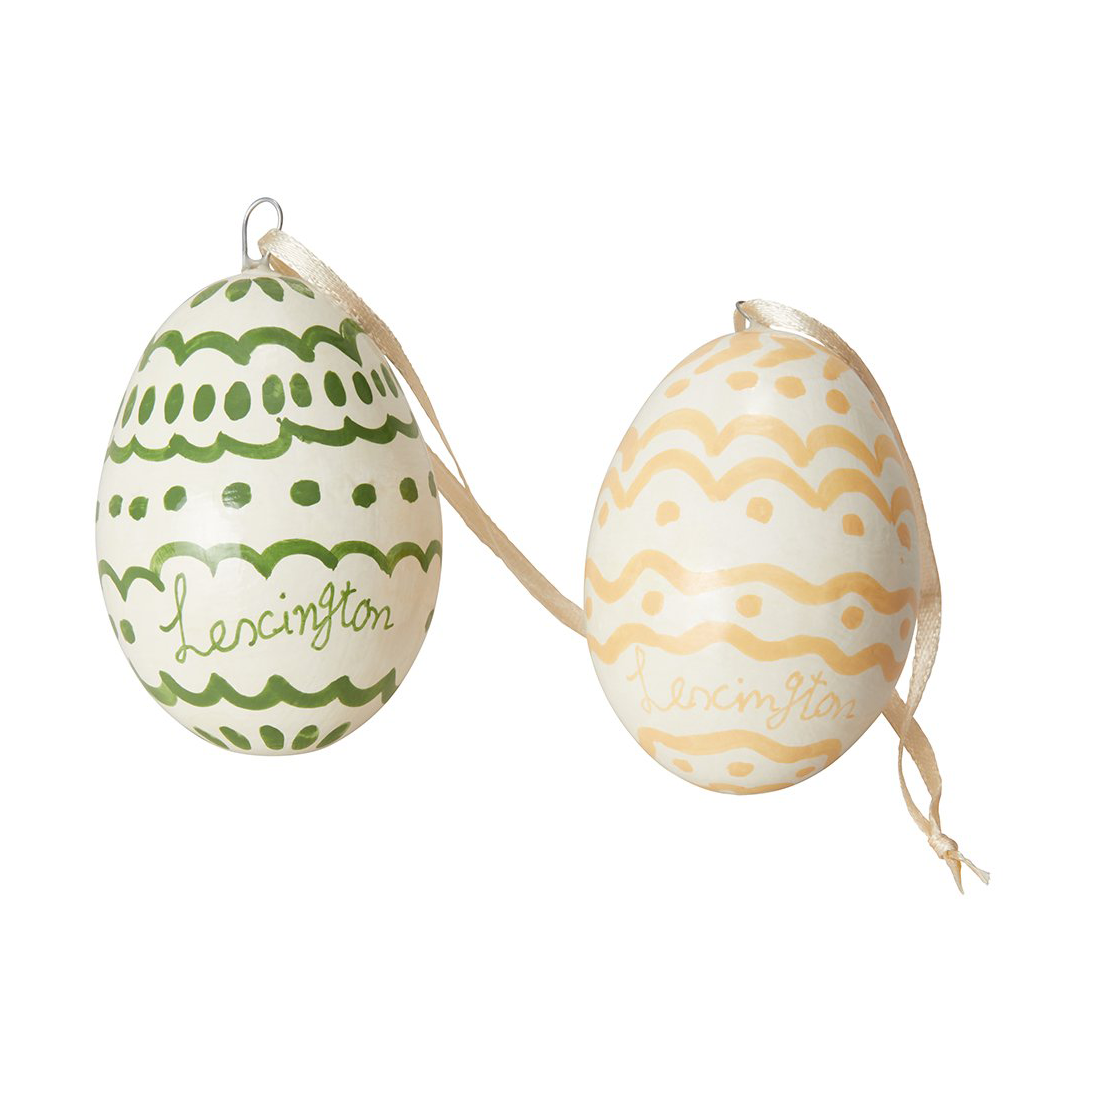 Lexington Easter Eggs in Papier Maché påskeophæng 2-pak Green-yellow